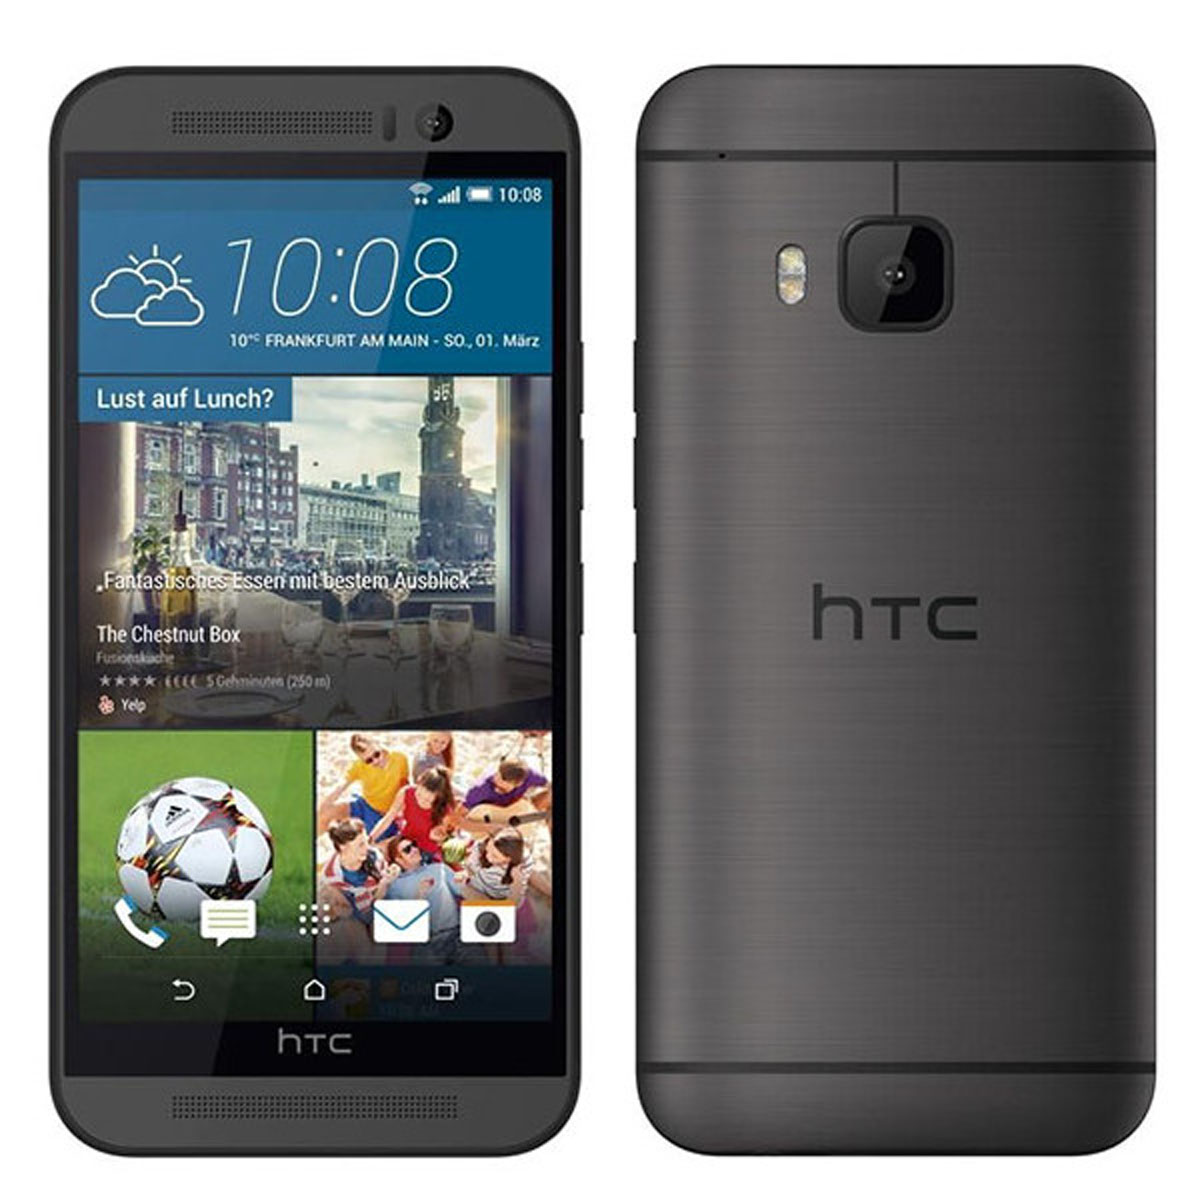 HTC - 